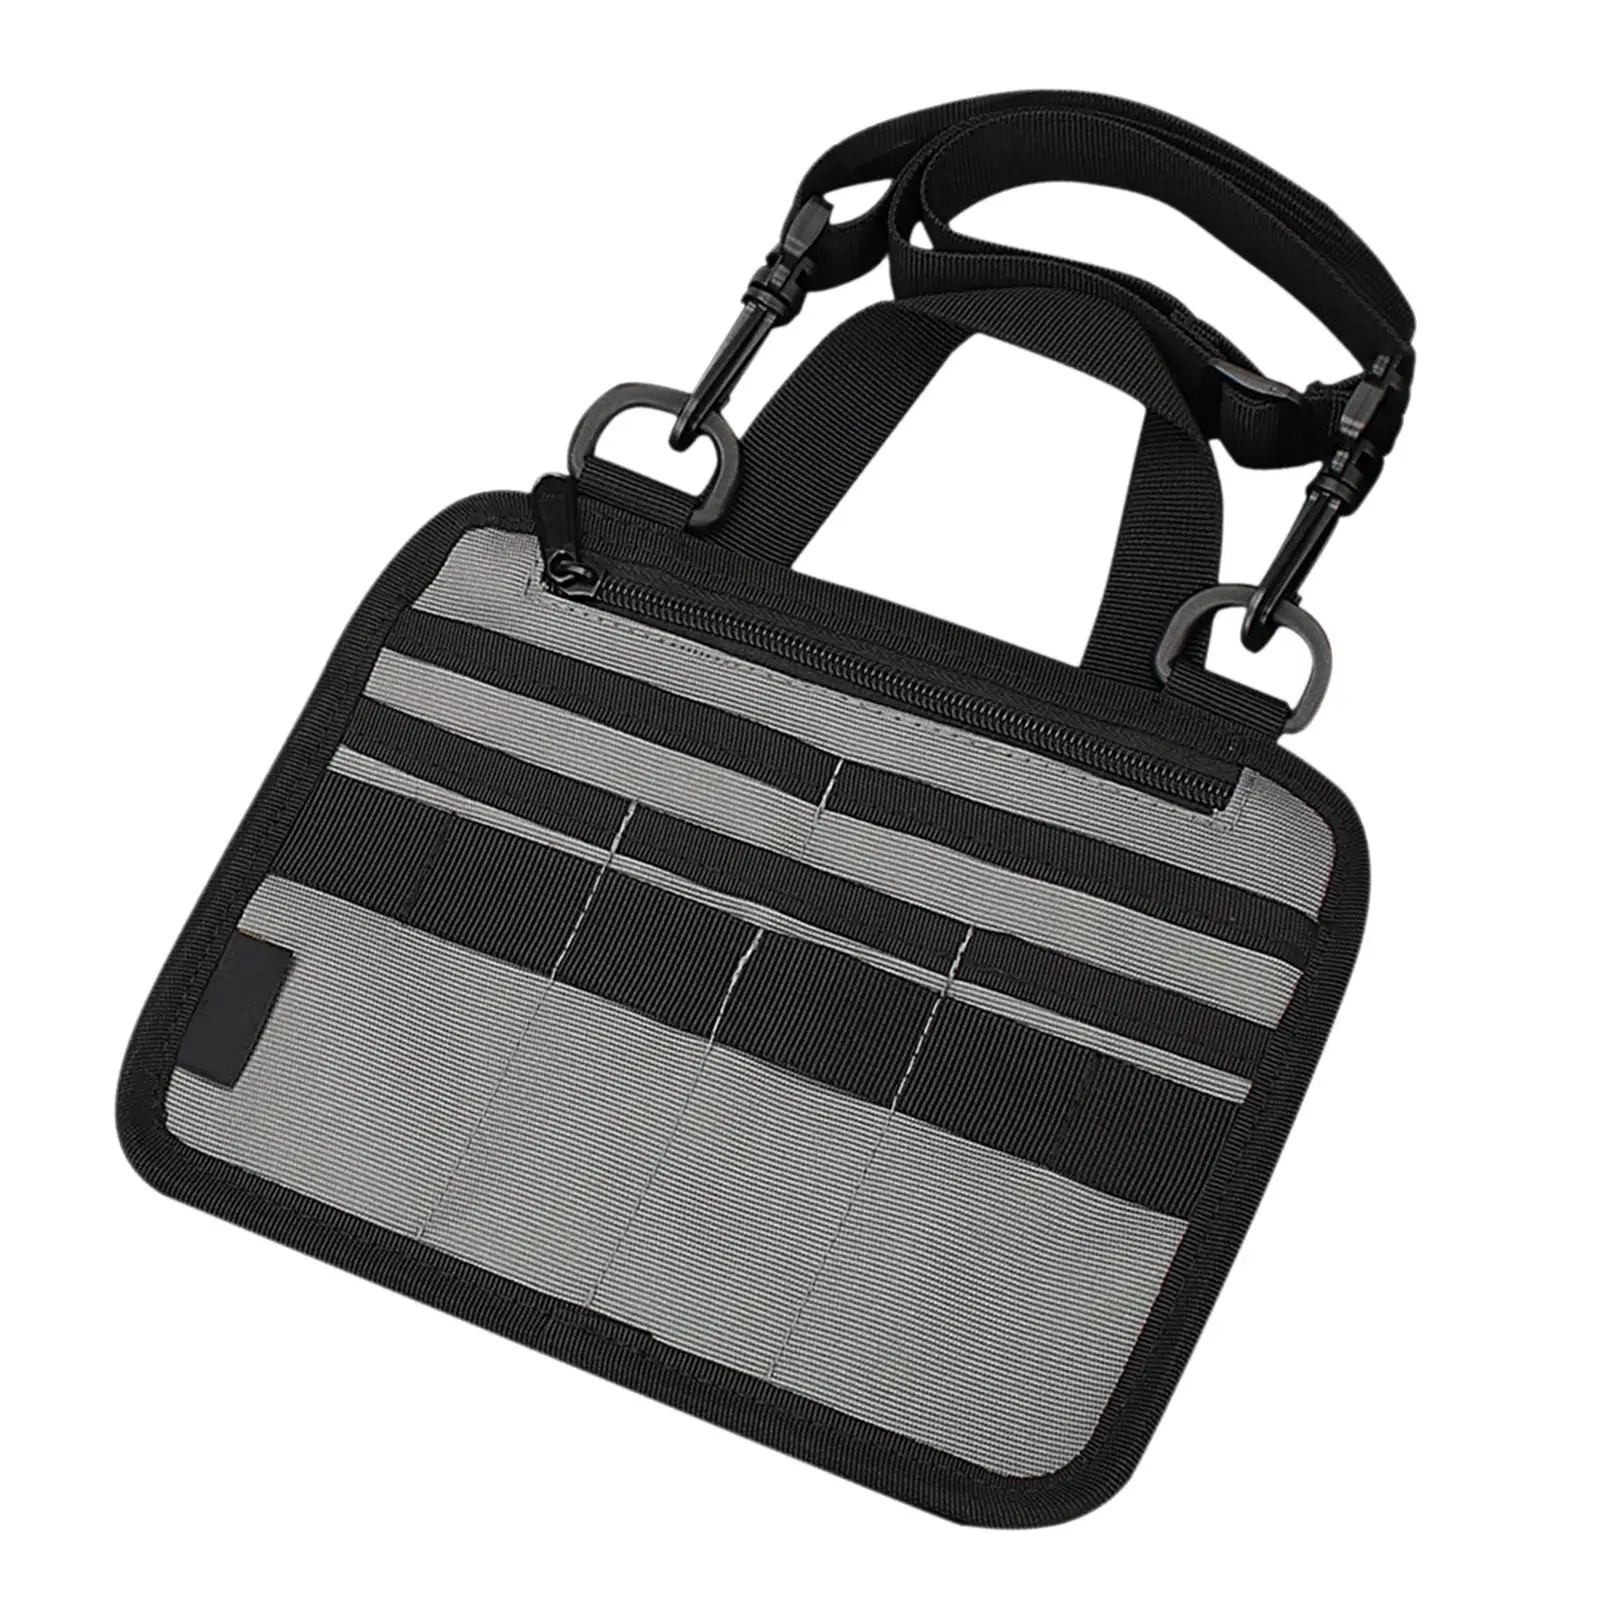 Multipurpose Tool Pouch Multi Pockets Sundries Storage Bag Shoulder Bag for